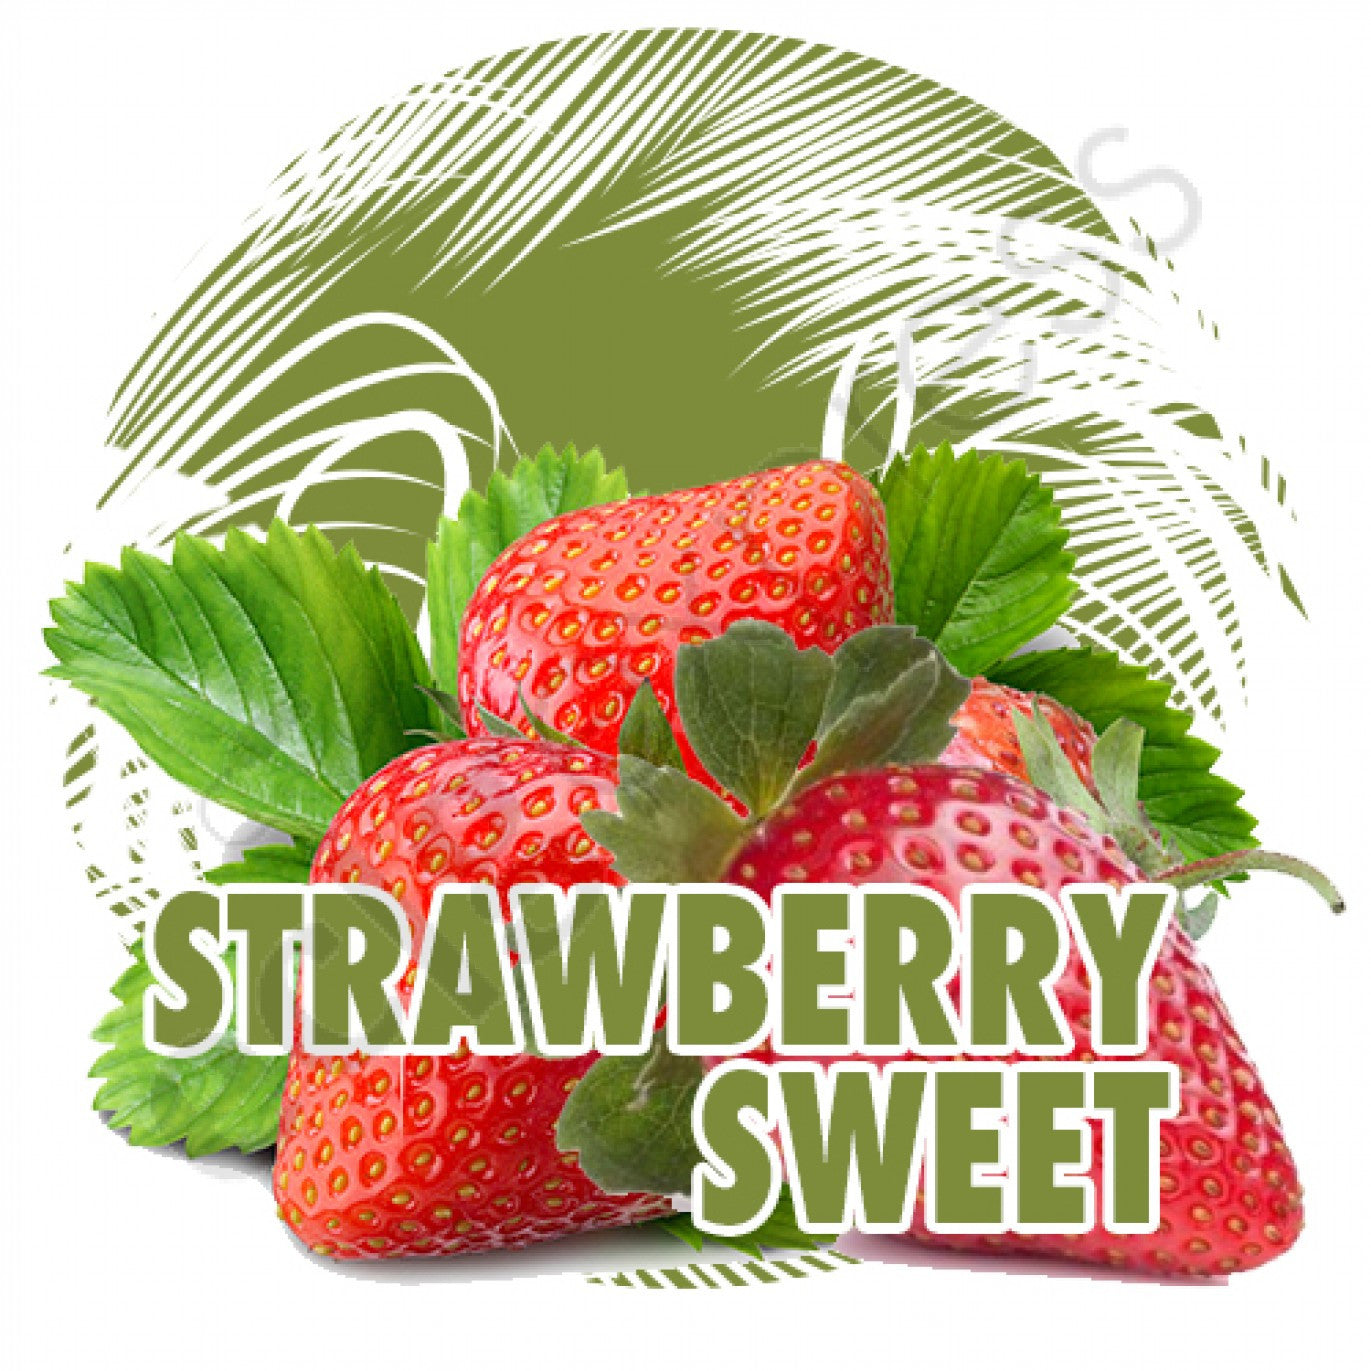 Sweet strawberry (JF) - Blck vapour